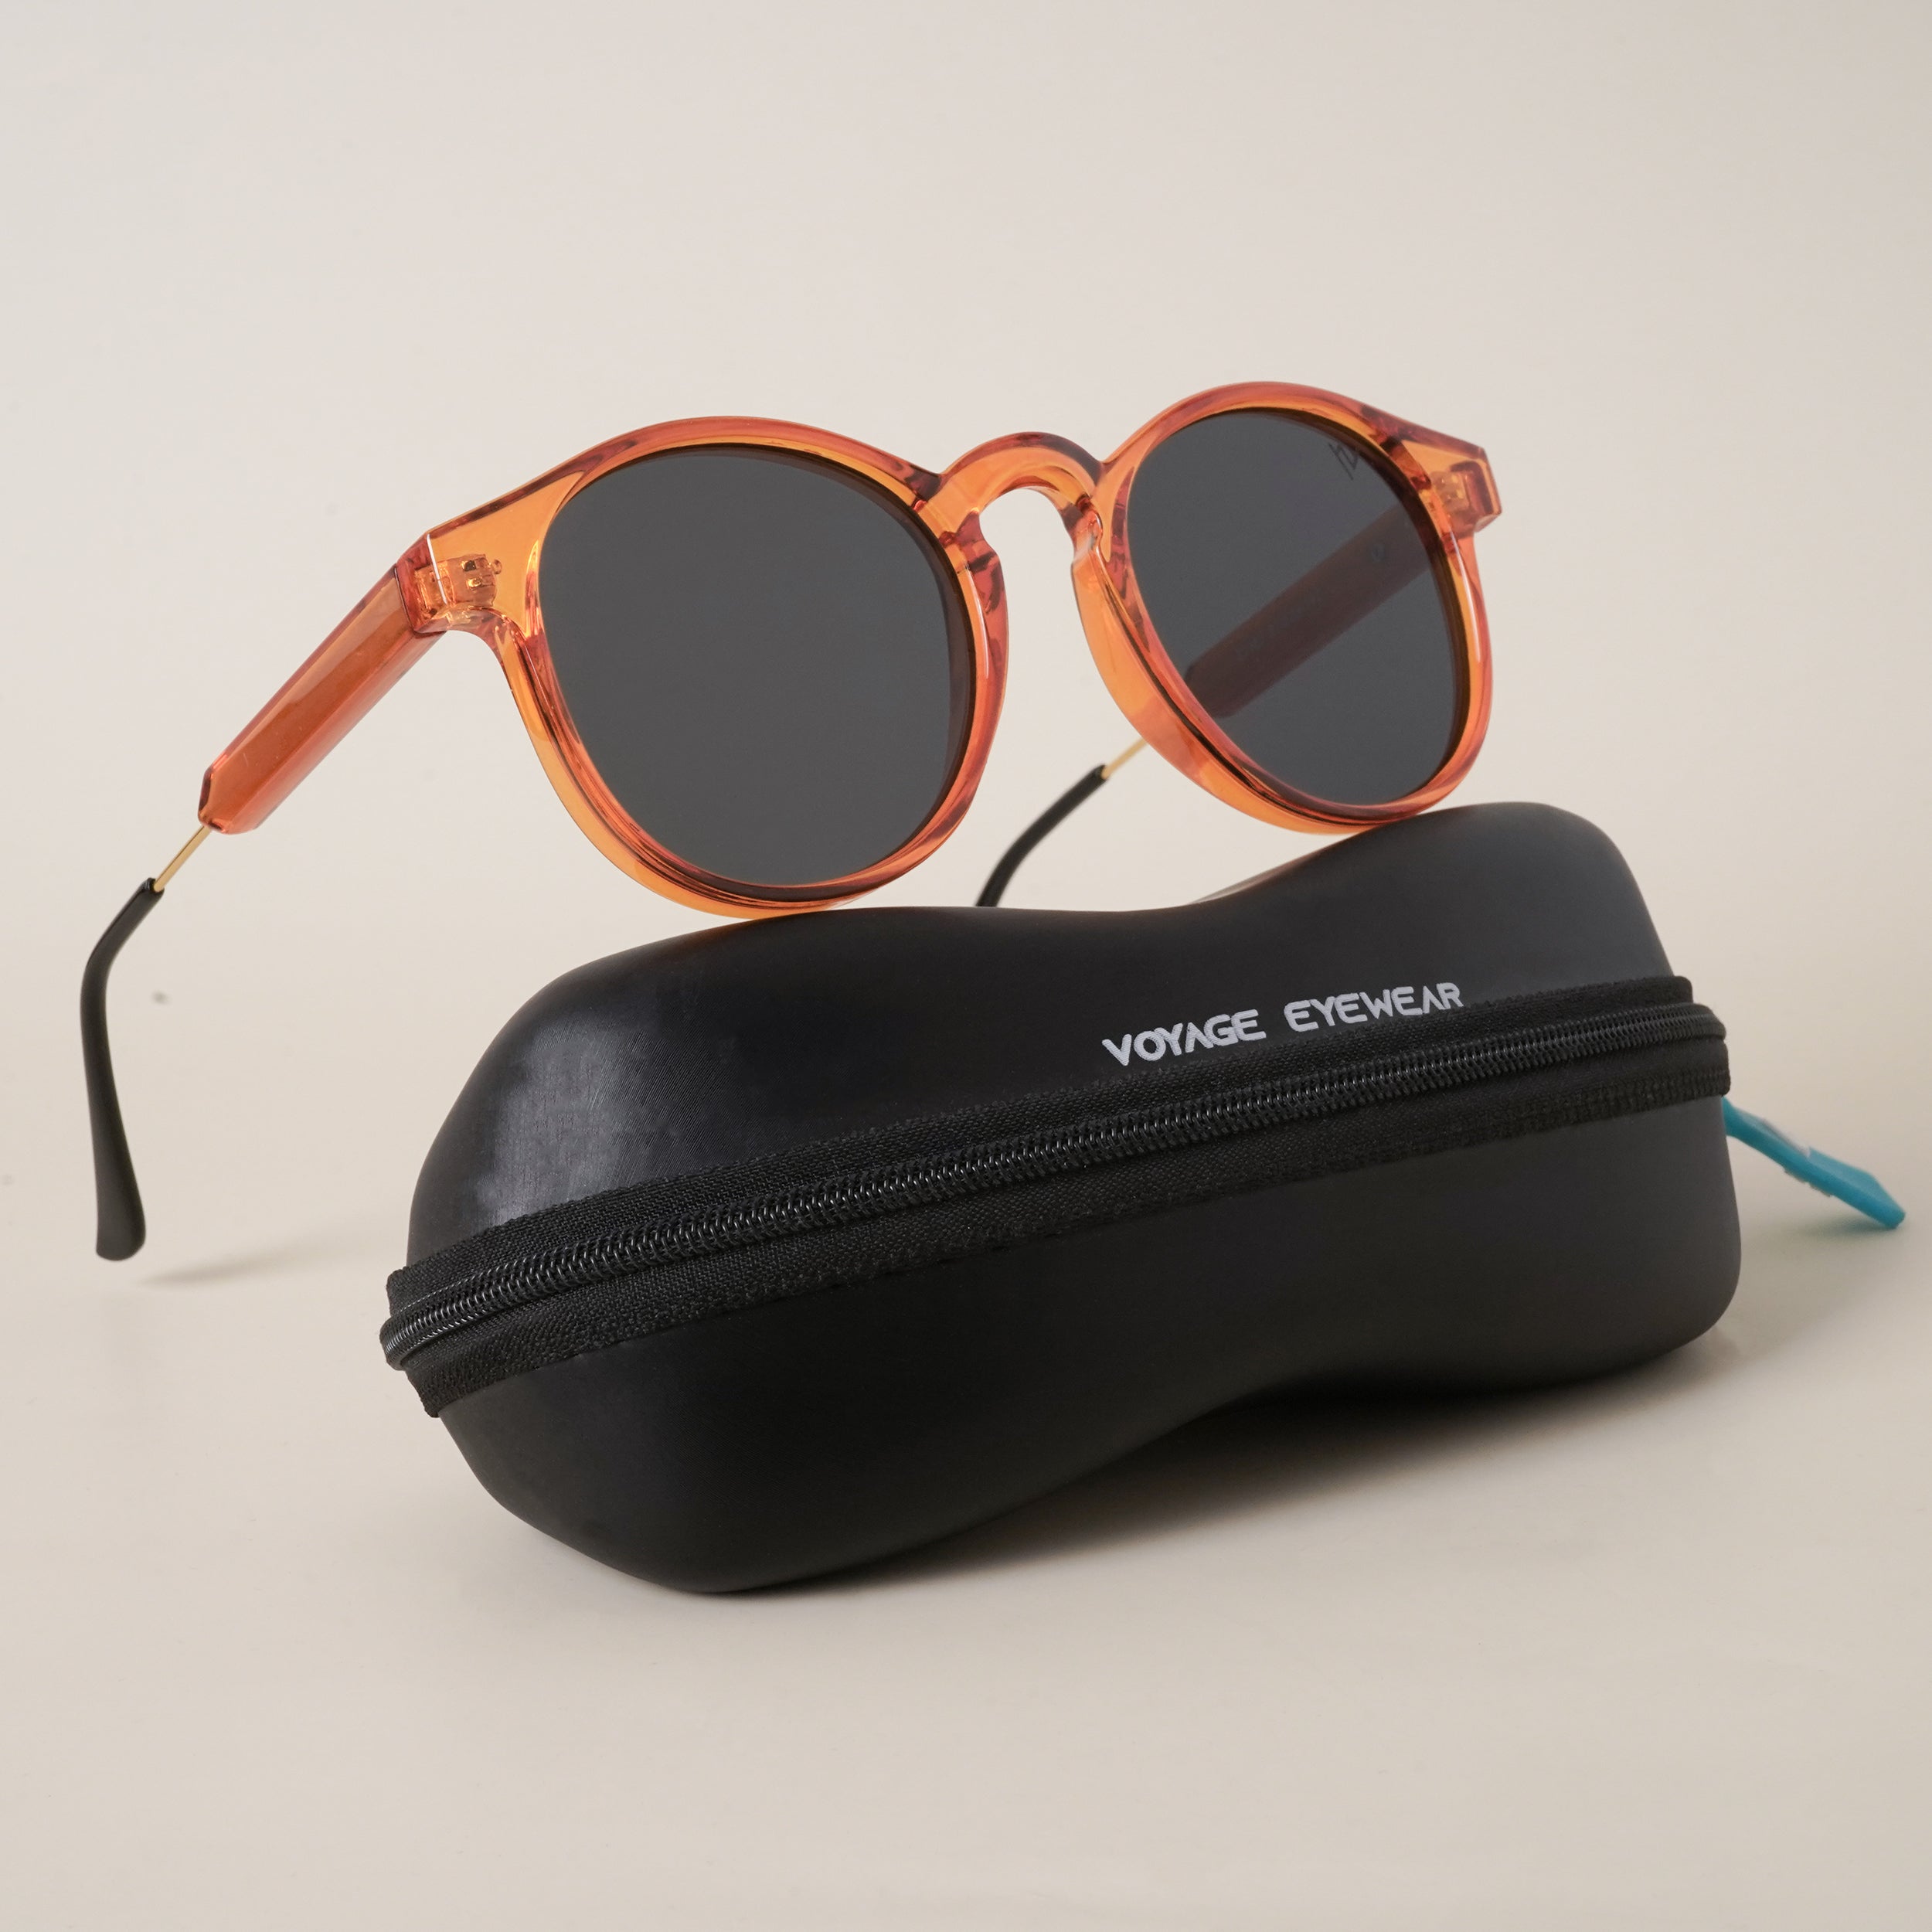 Voyage Orange Round Sunglasses - MG3879